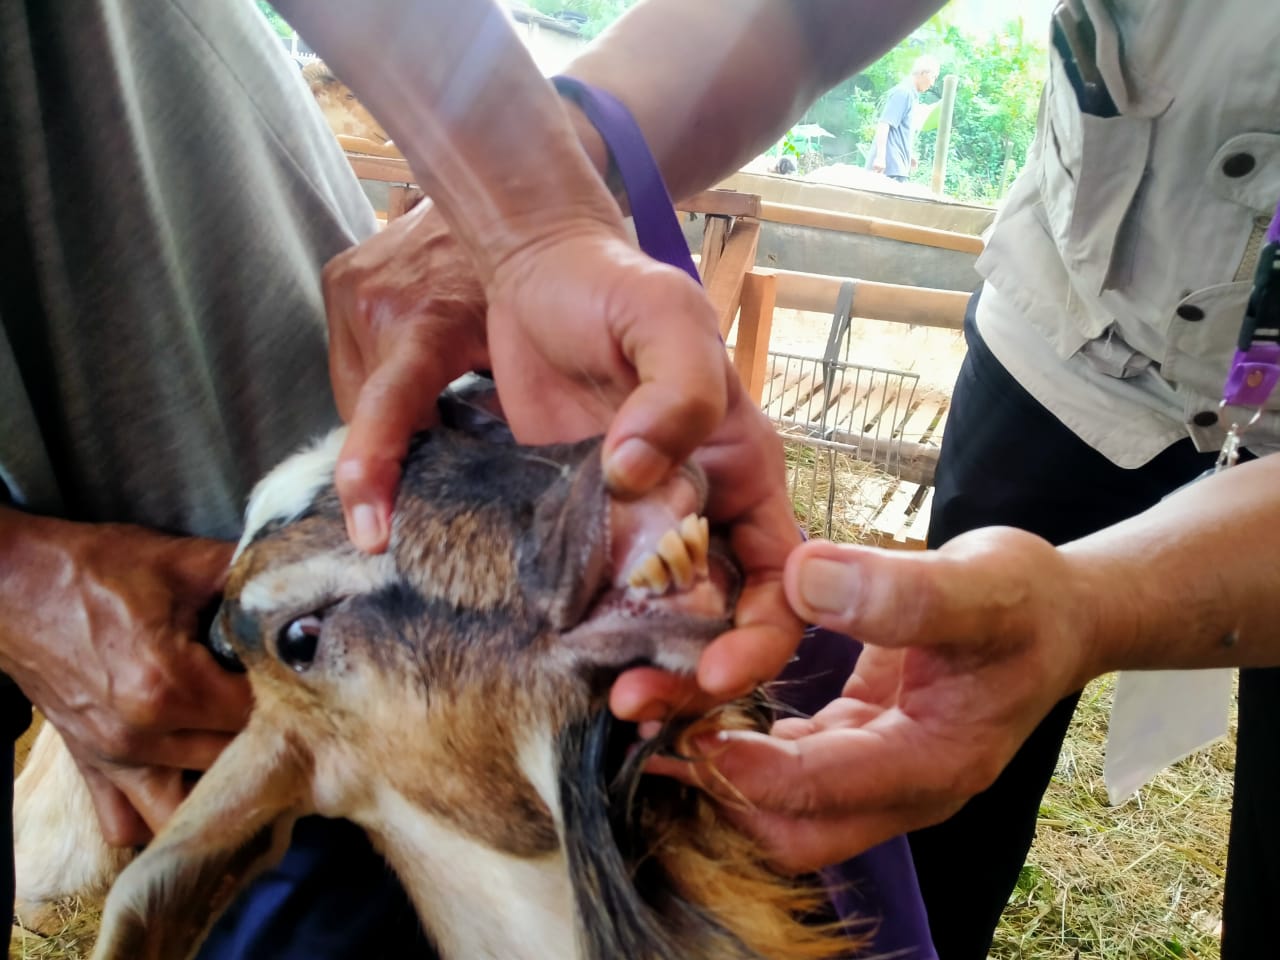 Dinas Pertanian dan Ketahanan Pangan (DPKP) melakukan pengecekan kesehatan pada hewan kurban secara serentak di 29 kecamatan, Selasa 13 Juli 2021.